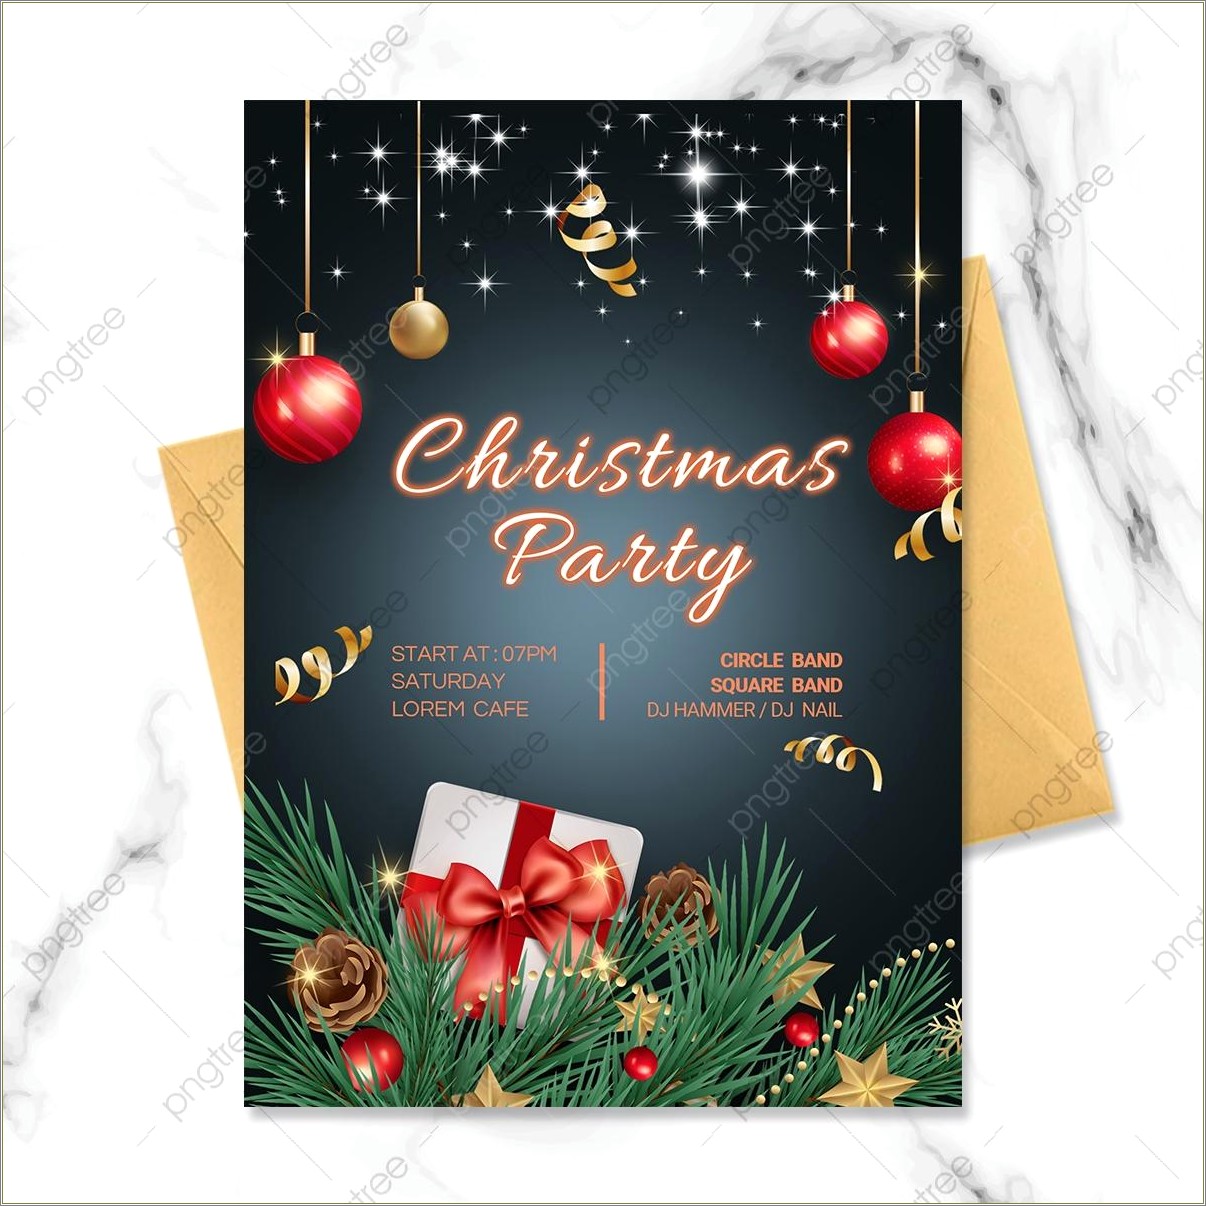 Free Christmas Party Invitation Templates Psd